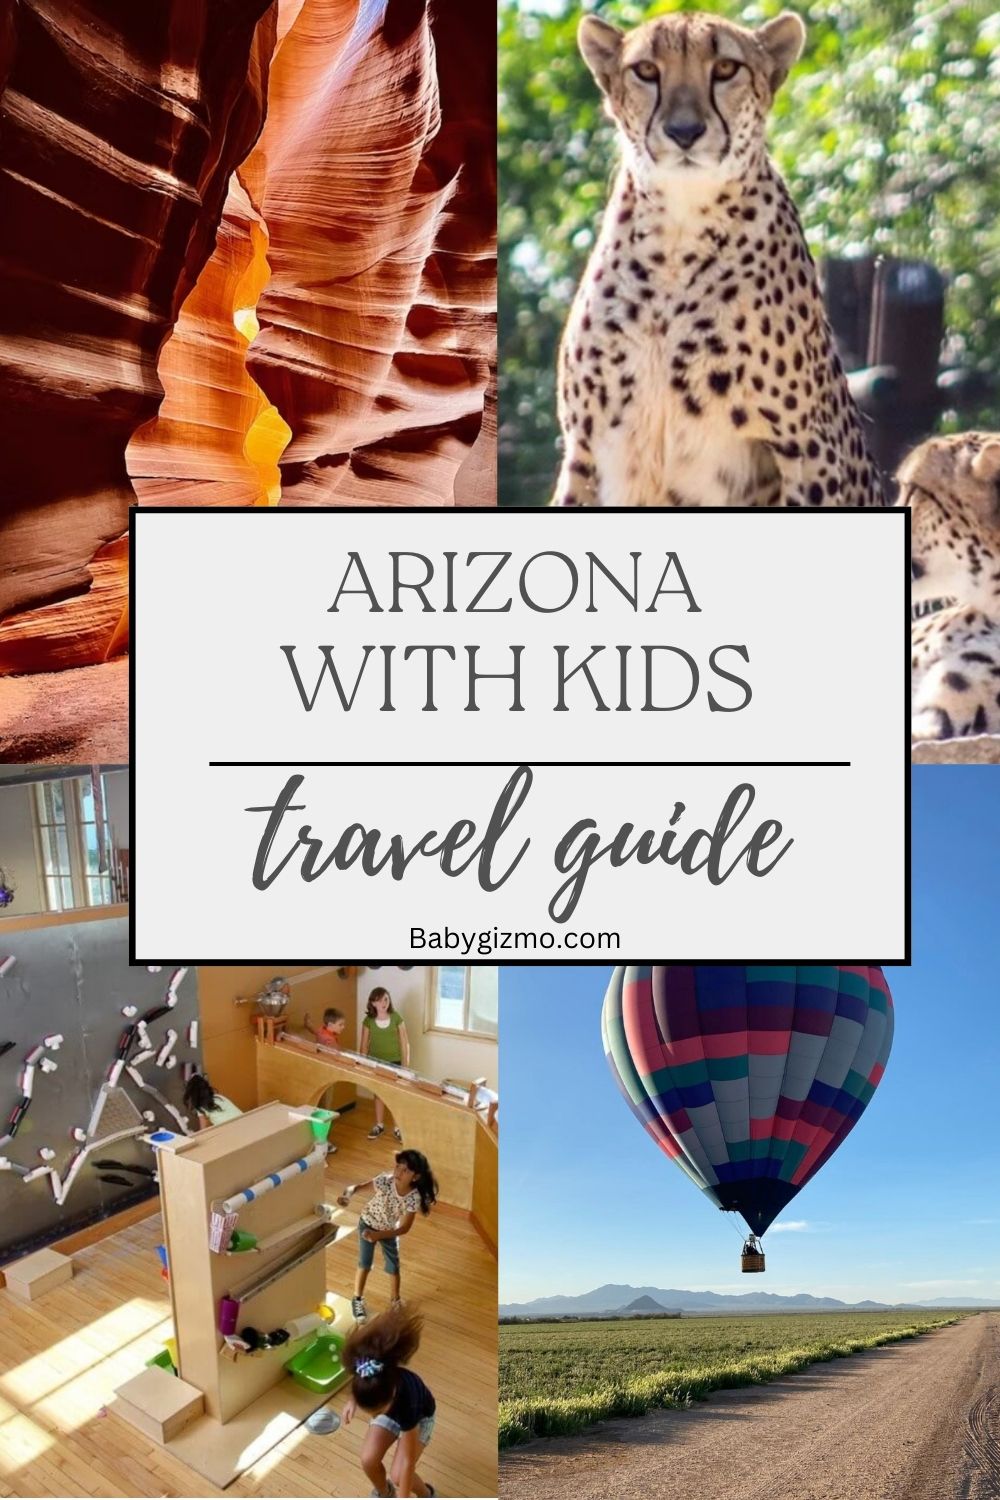 Arizona travel guide